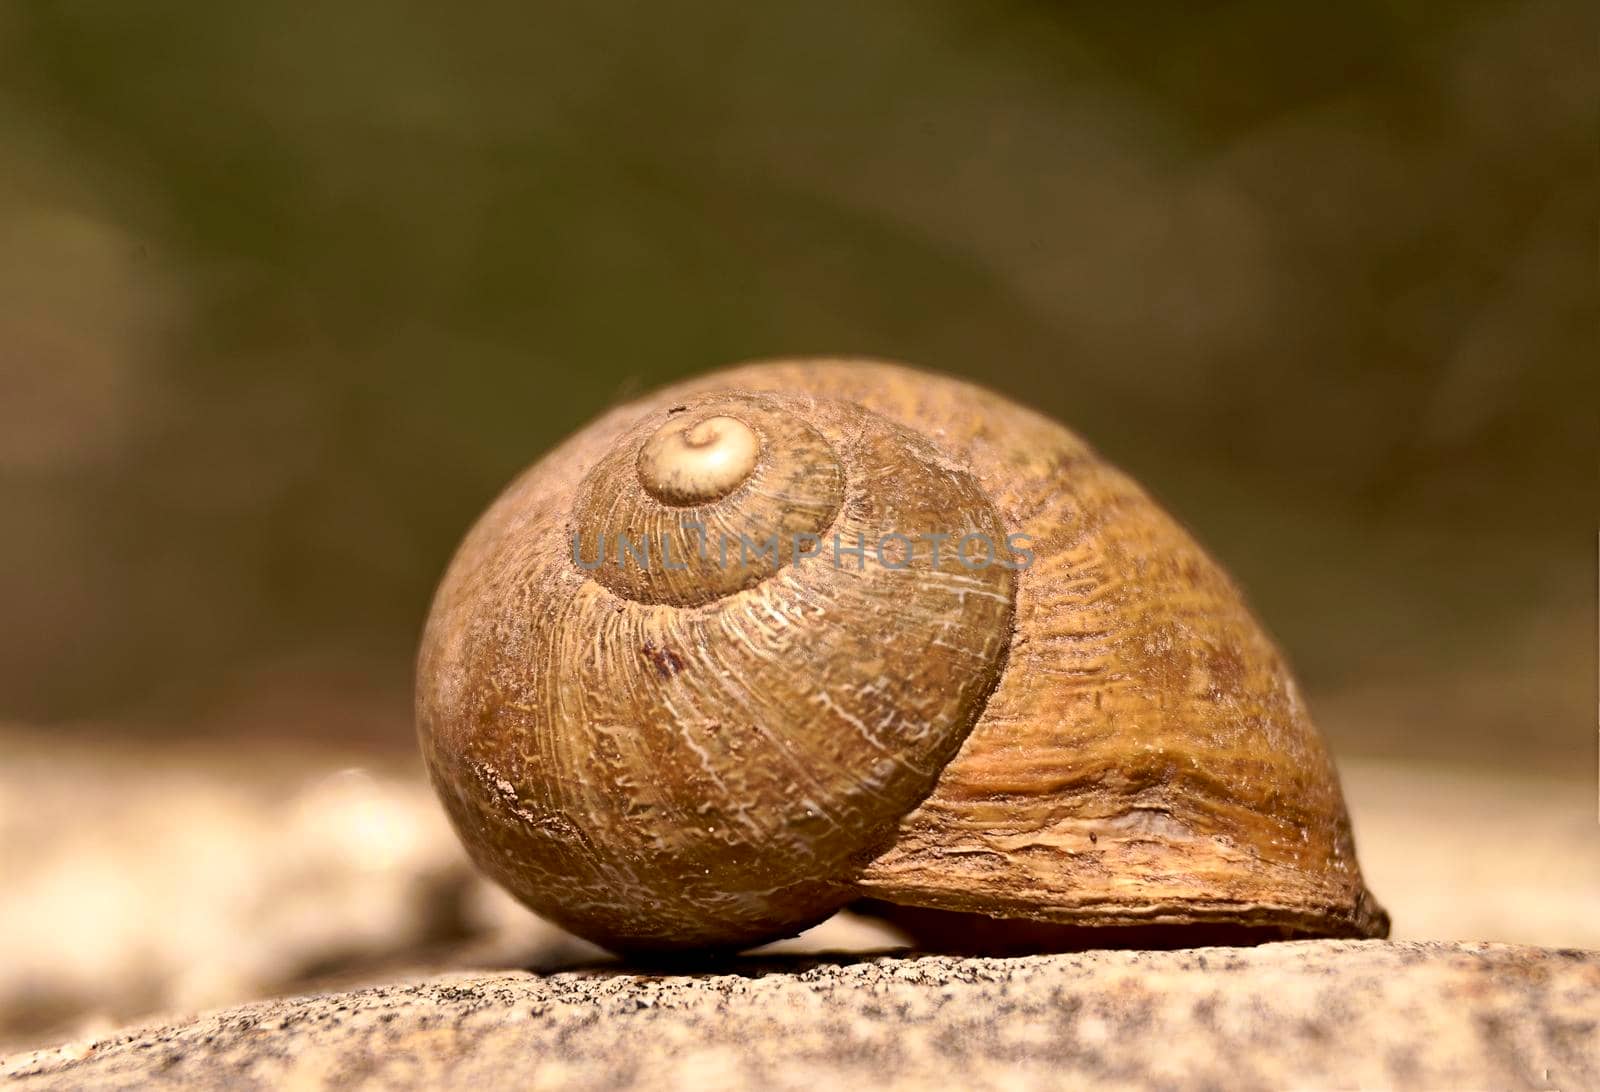 Snail on grey stone on a blurred background by raul_ruiz